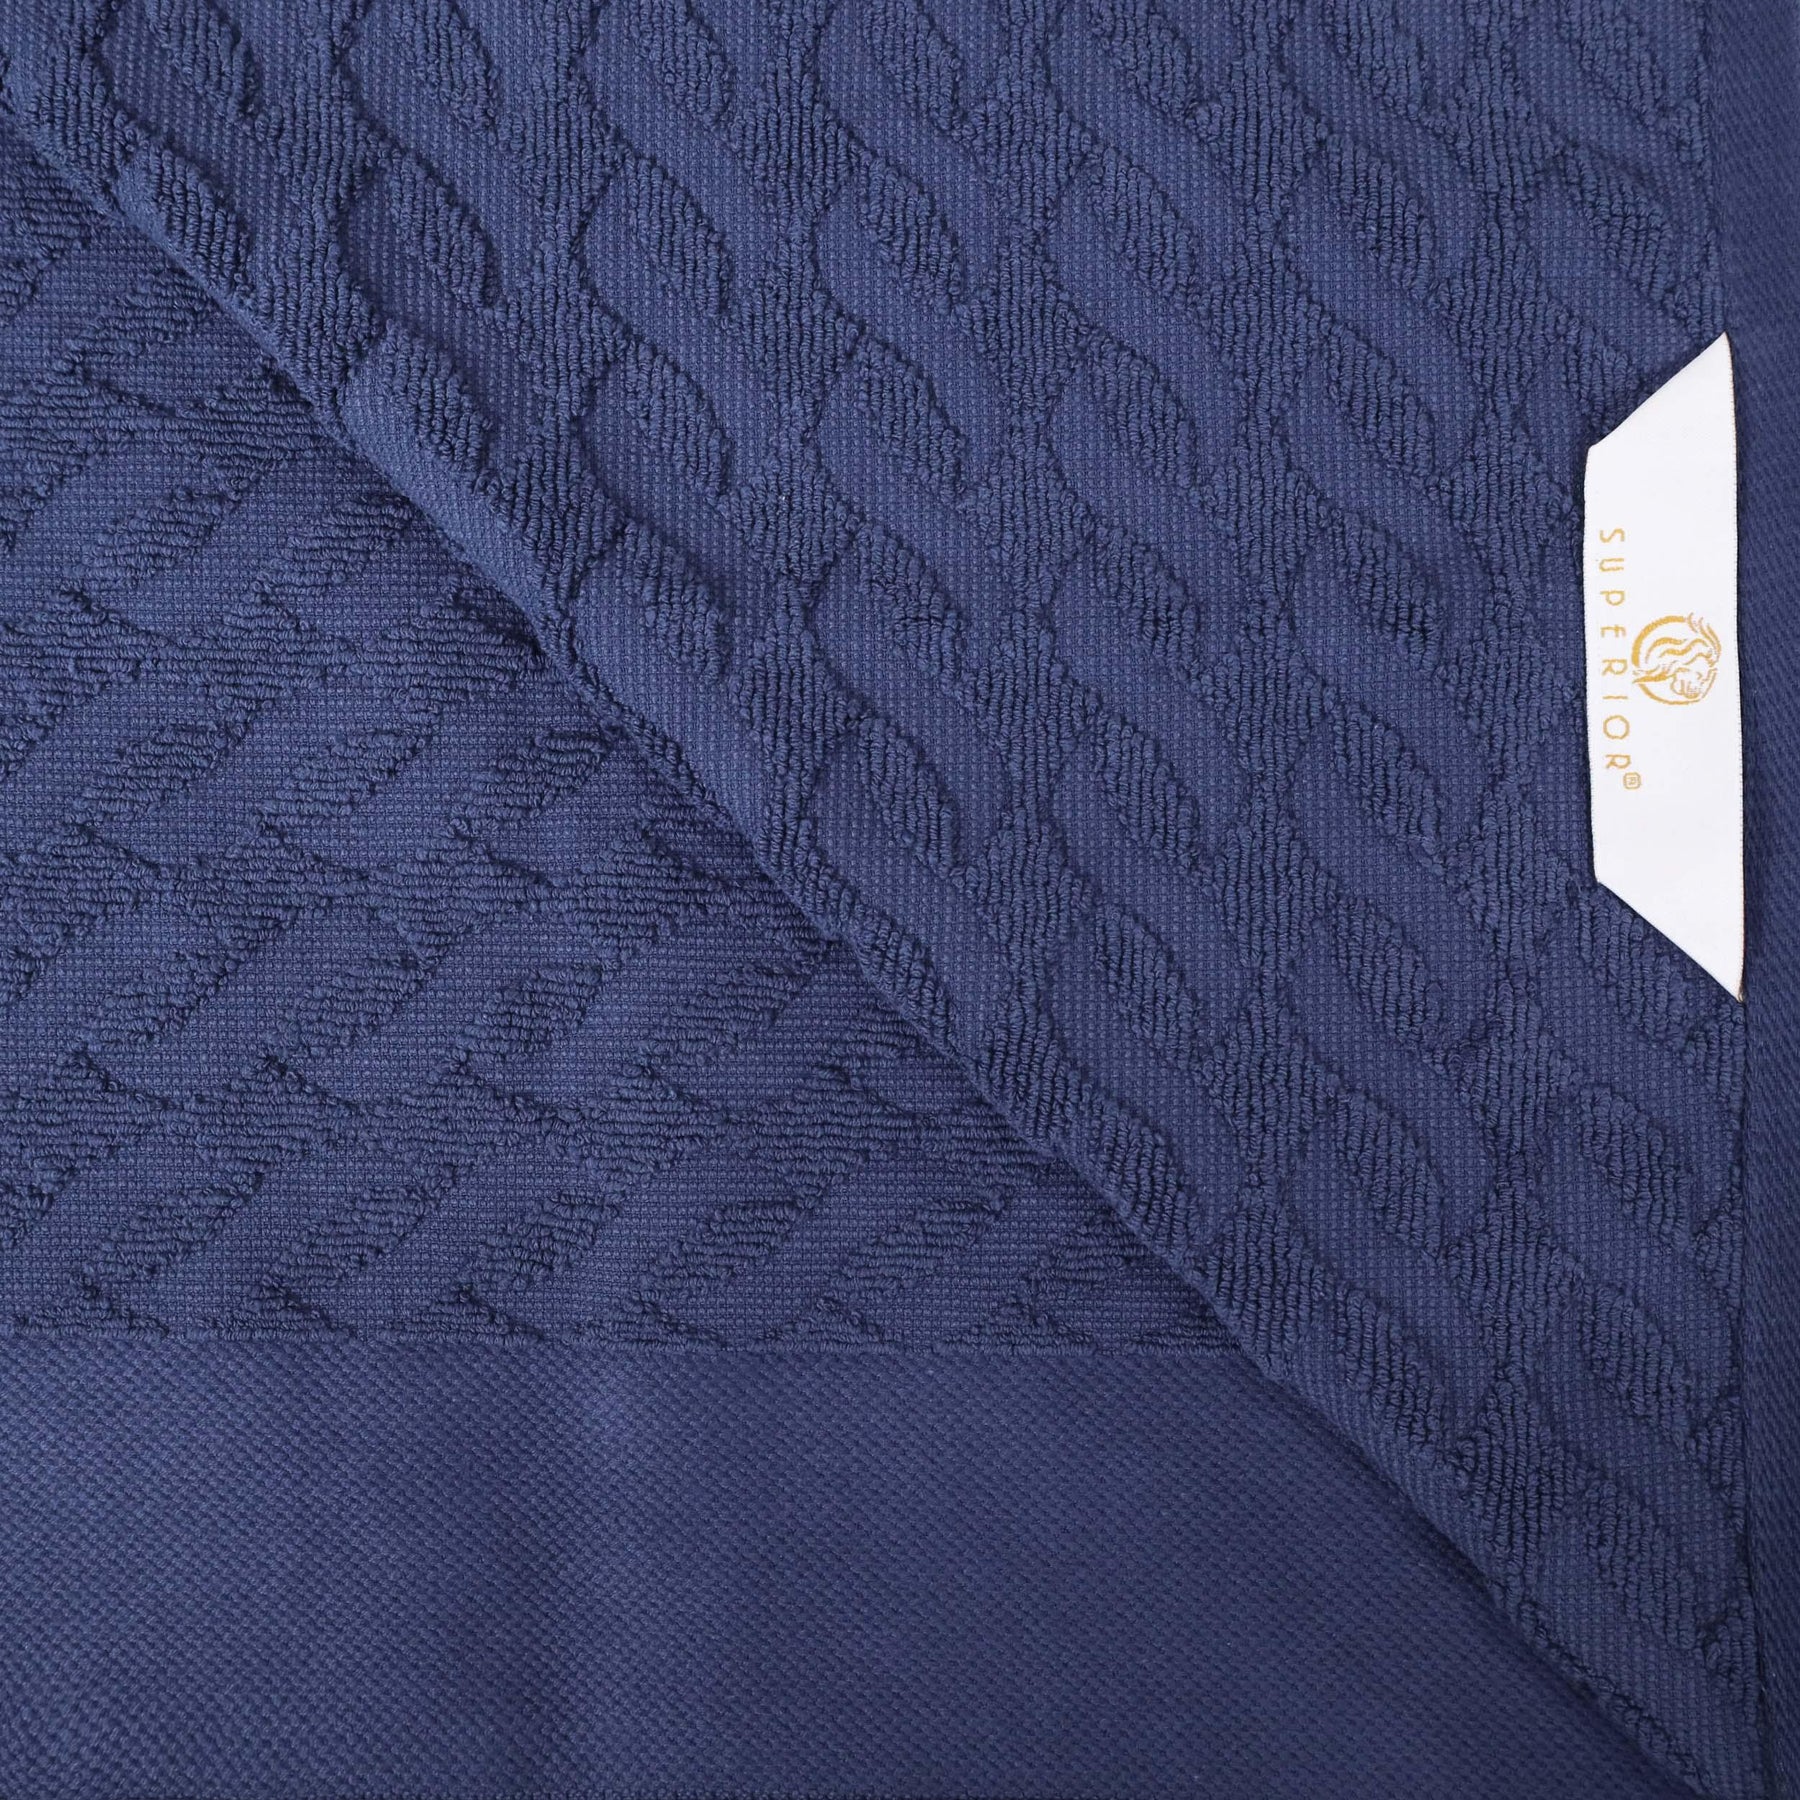 Premium Turkish Cotton Jacquard Herringbone and Solid 4-Piece Bath Towel Set - Navy Blue